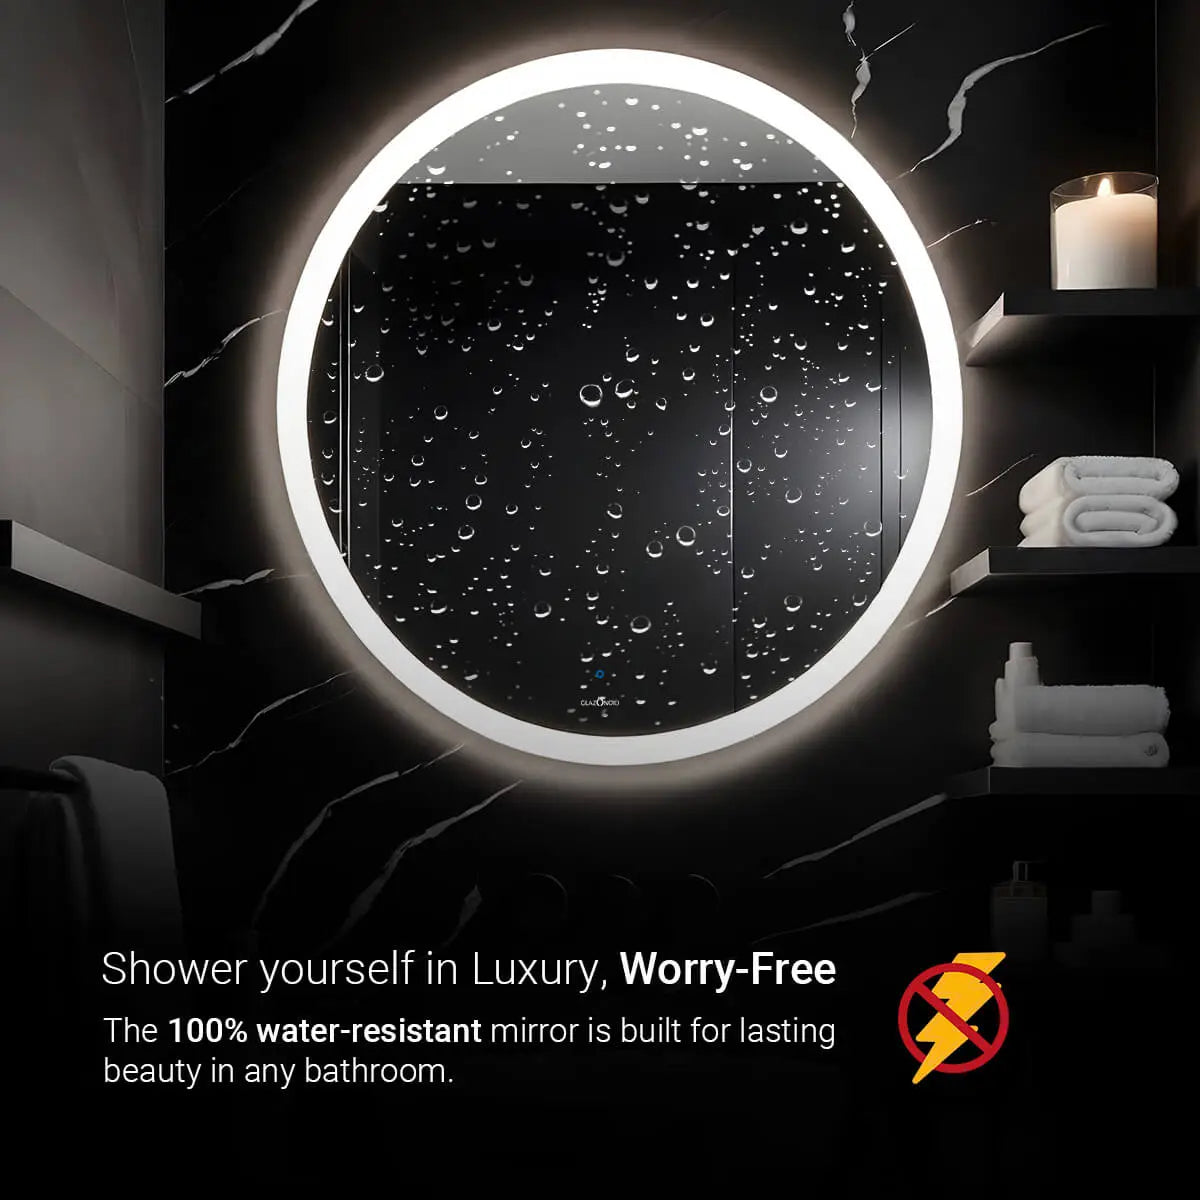 Bezel-Less Round | High intensity LED Mirror | 5-Year Warranty, Premium Quality, Customizable LED Lighting